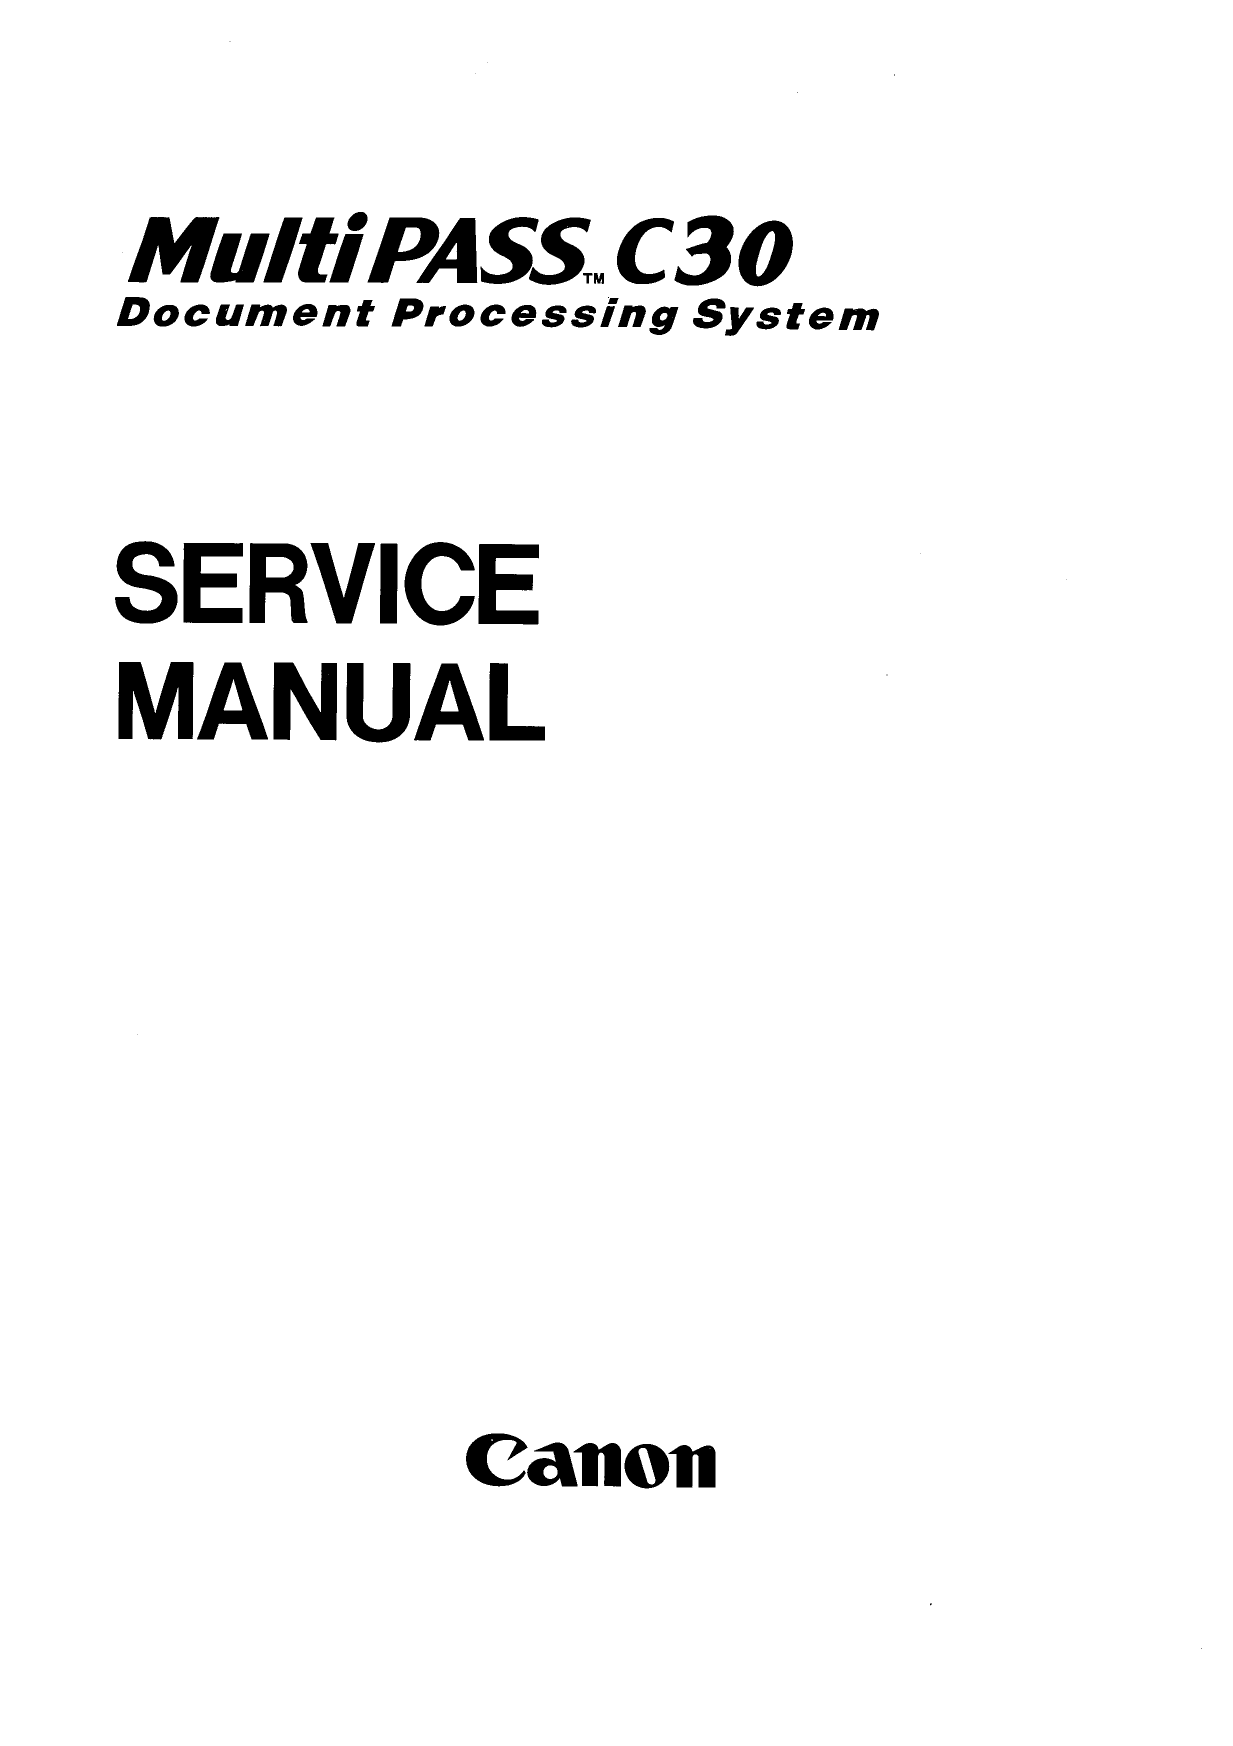 Canon MultiPASS MP-C30 Service Manual-1